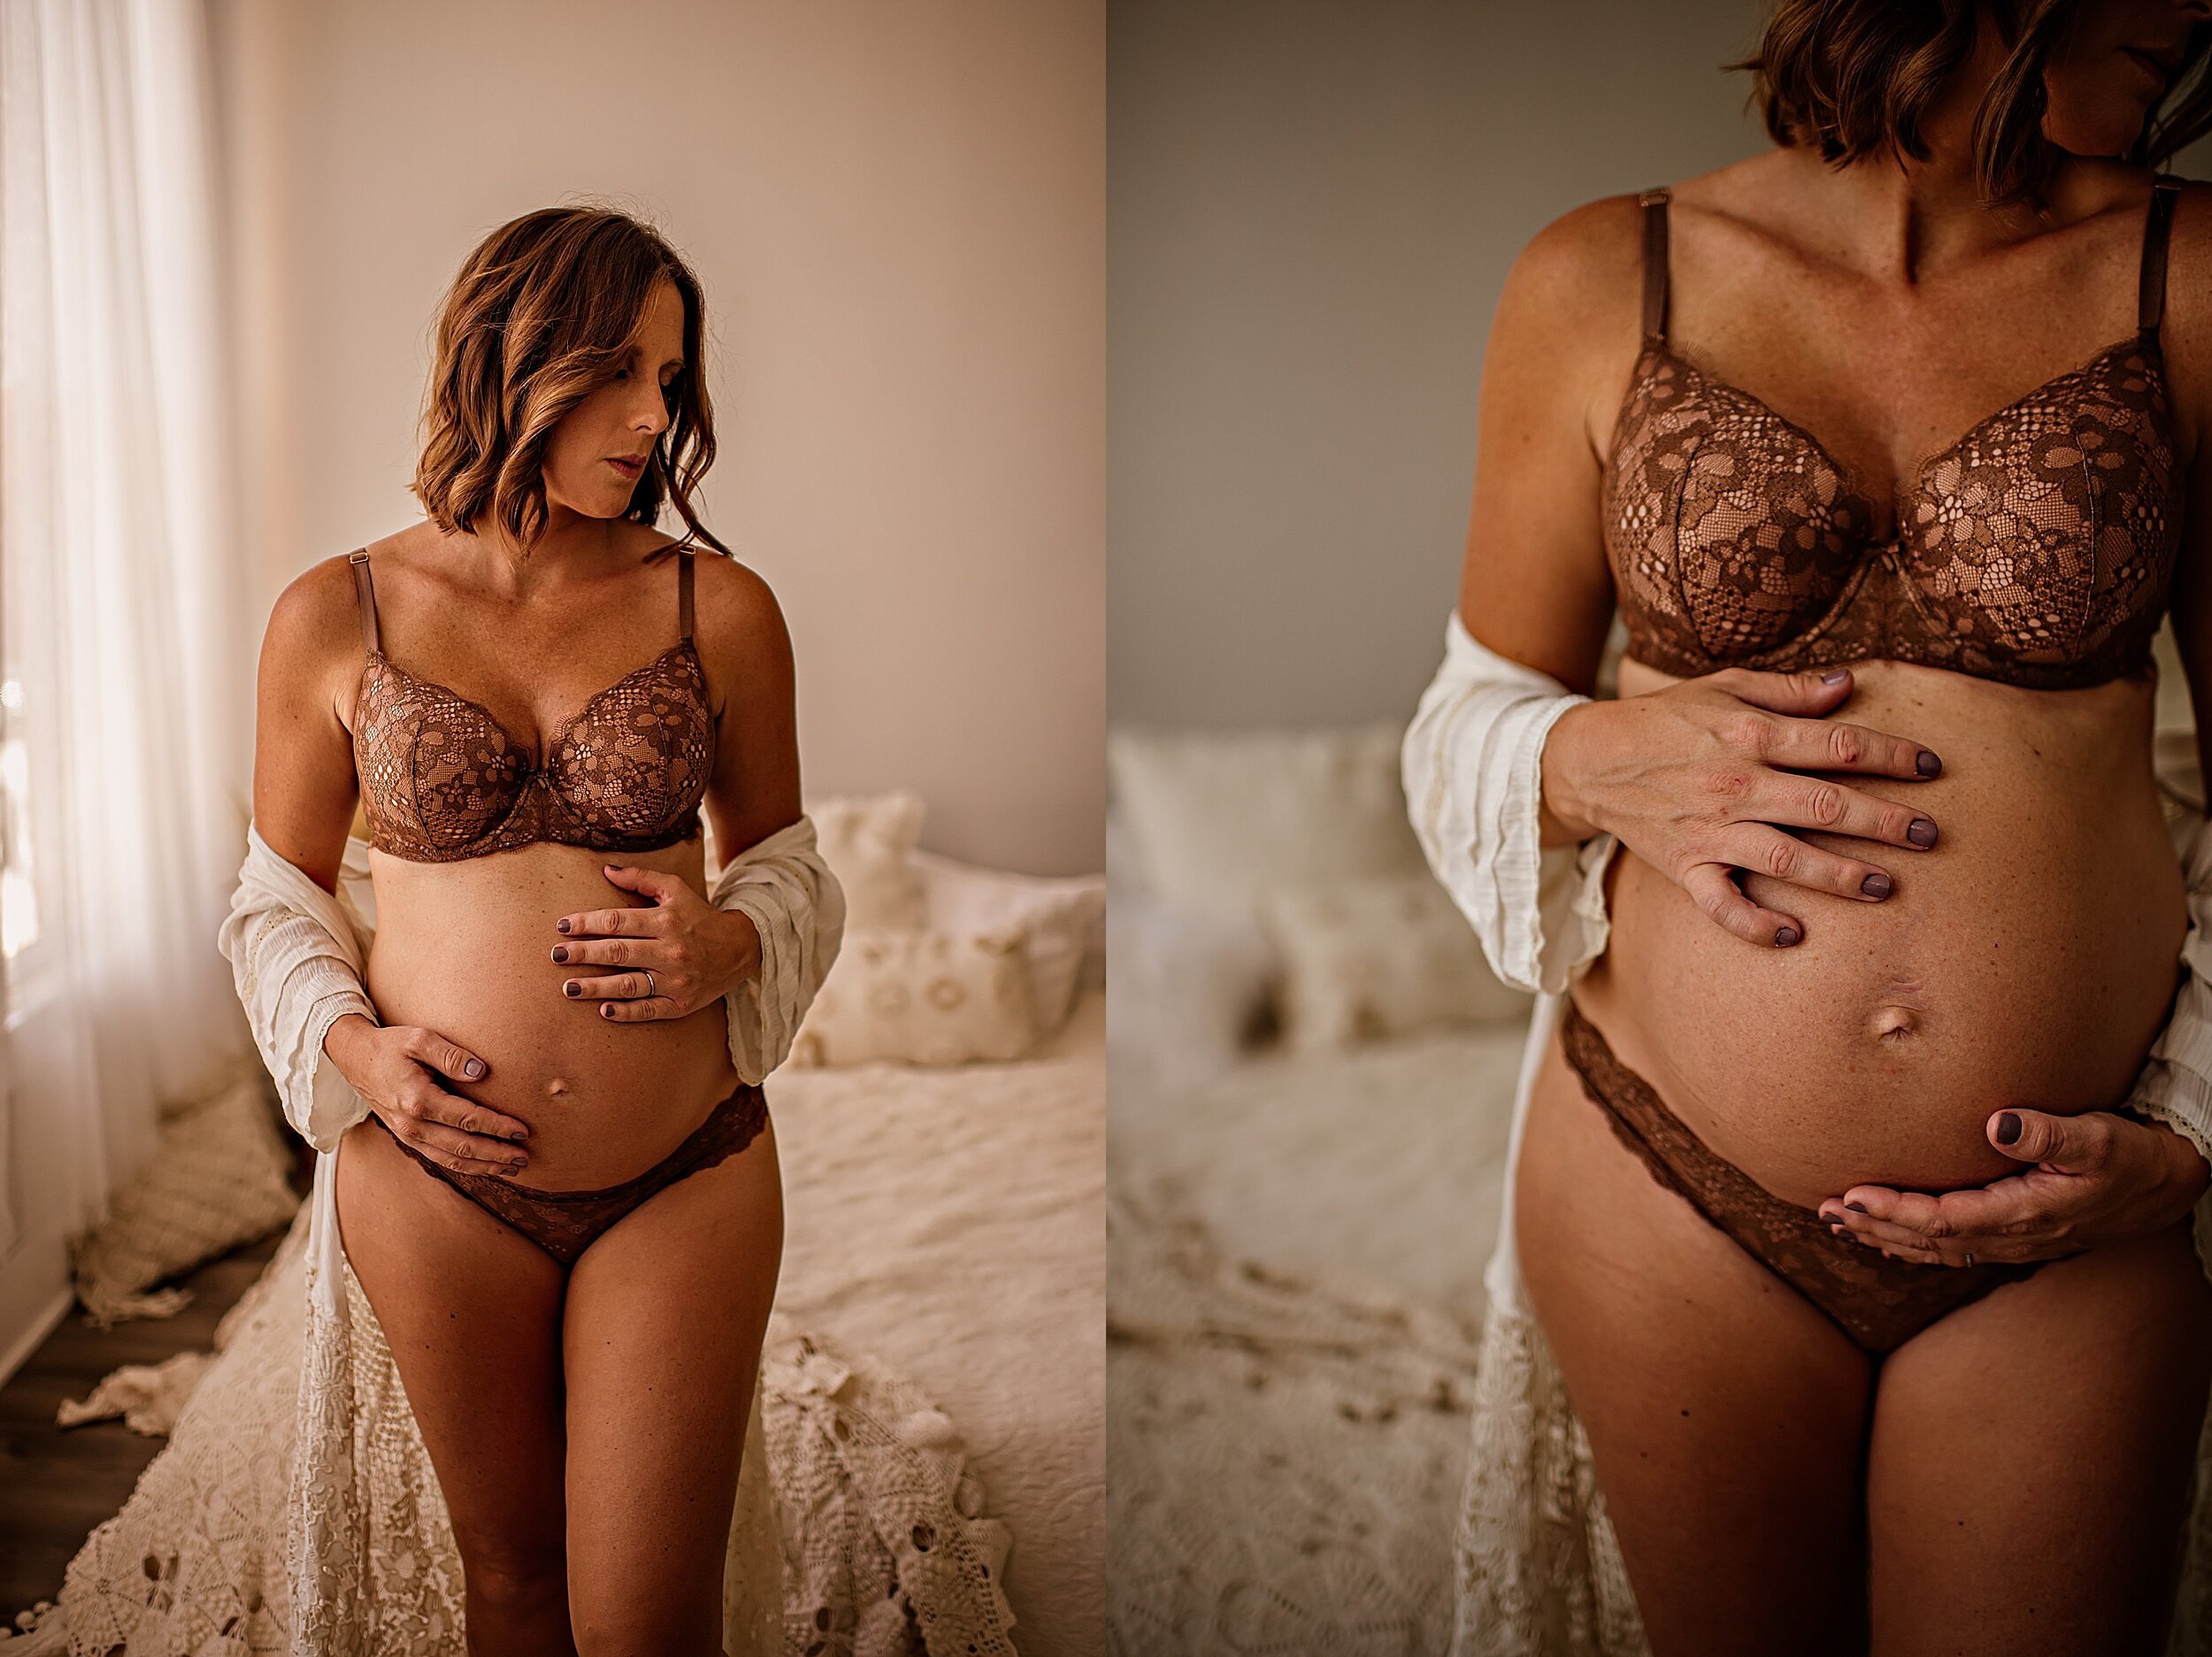 medina-ohio-maternity-studio-photographer-lauren-grayson-photography_0202.jpeg